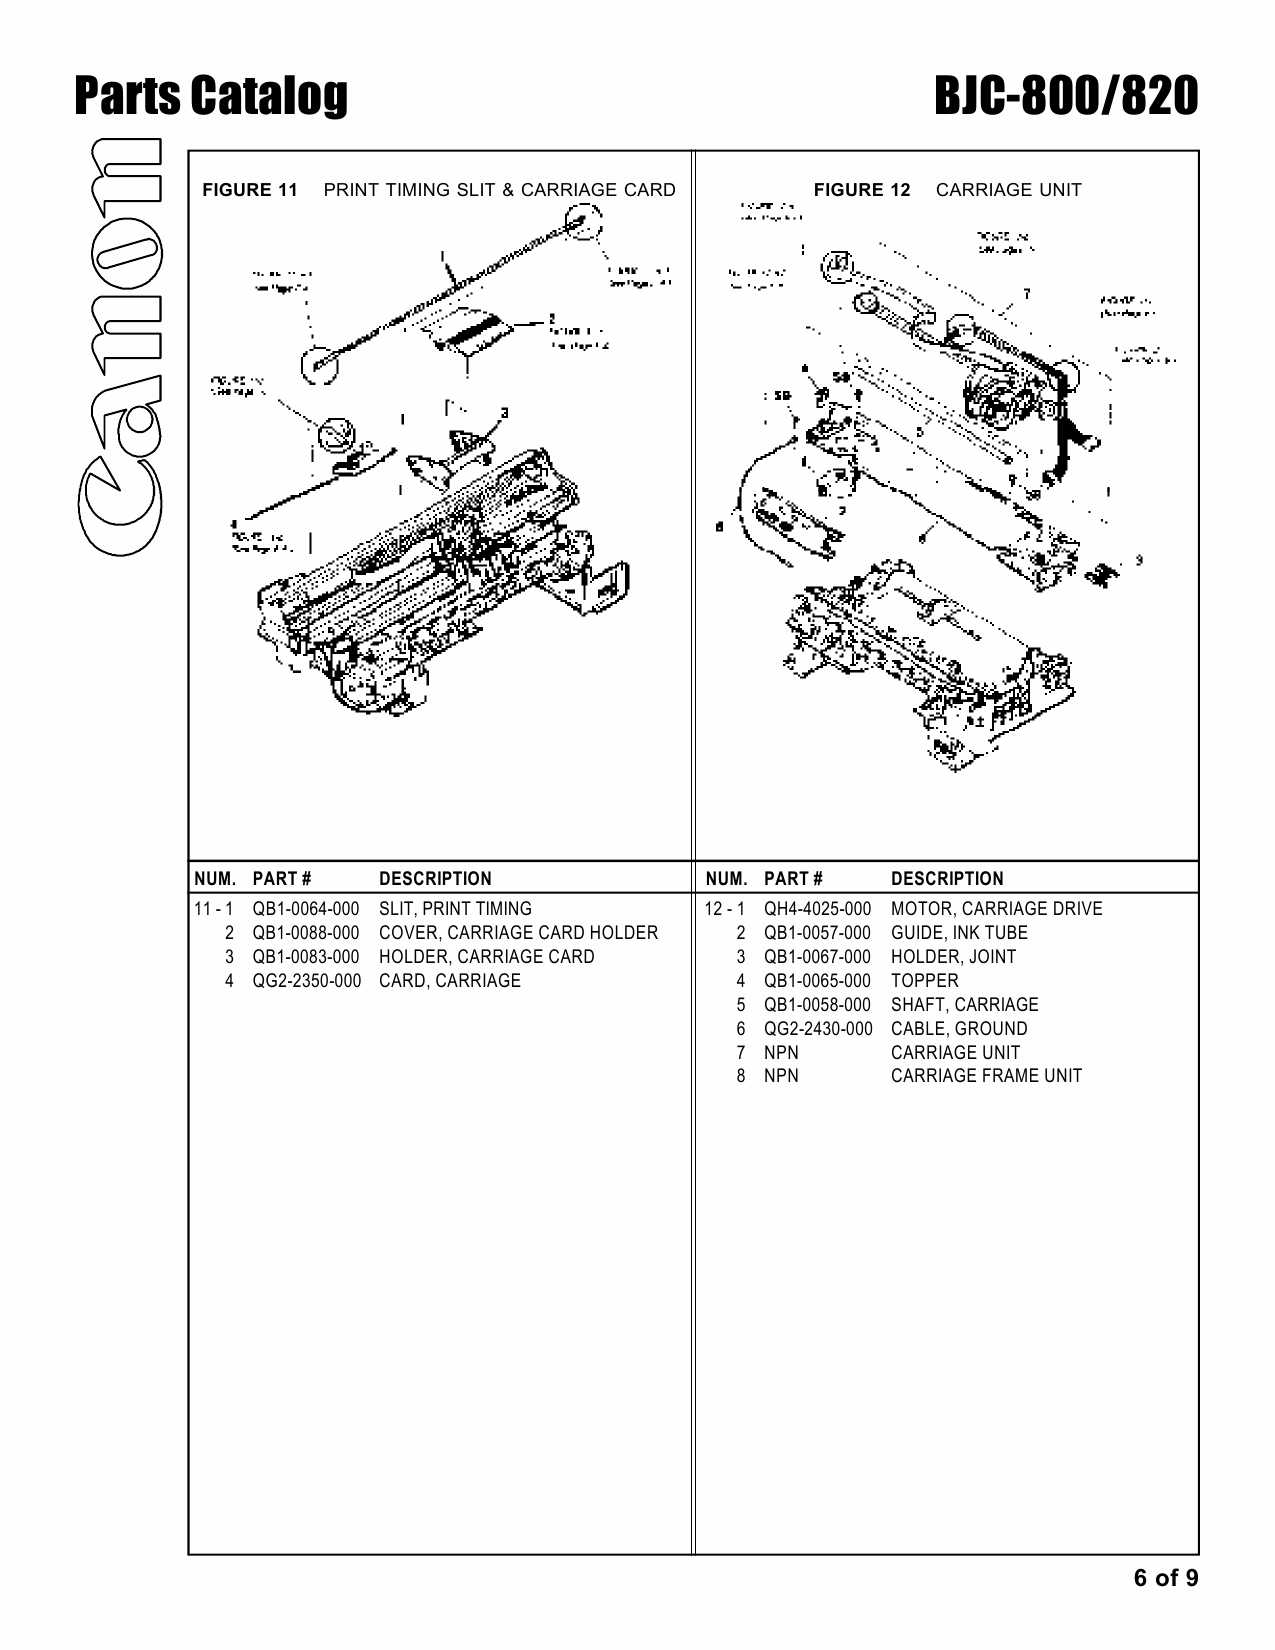 Canon BubbleJet BJC-800 820 Parts Catalog Manual-5